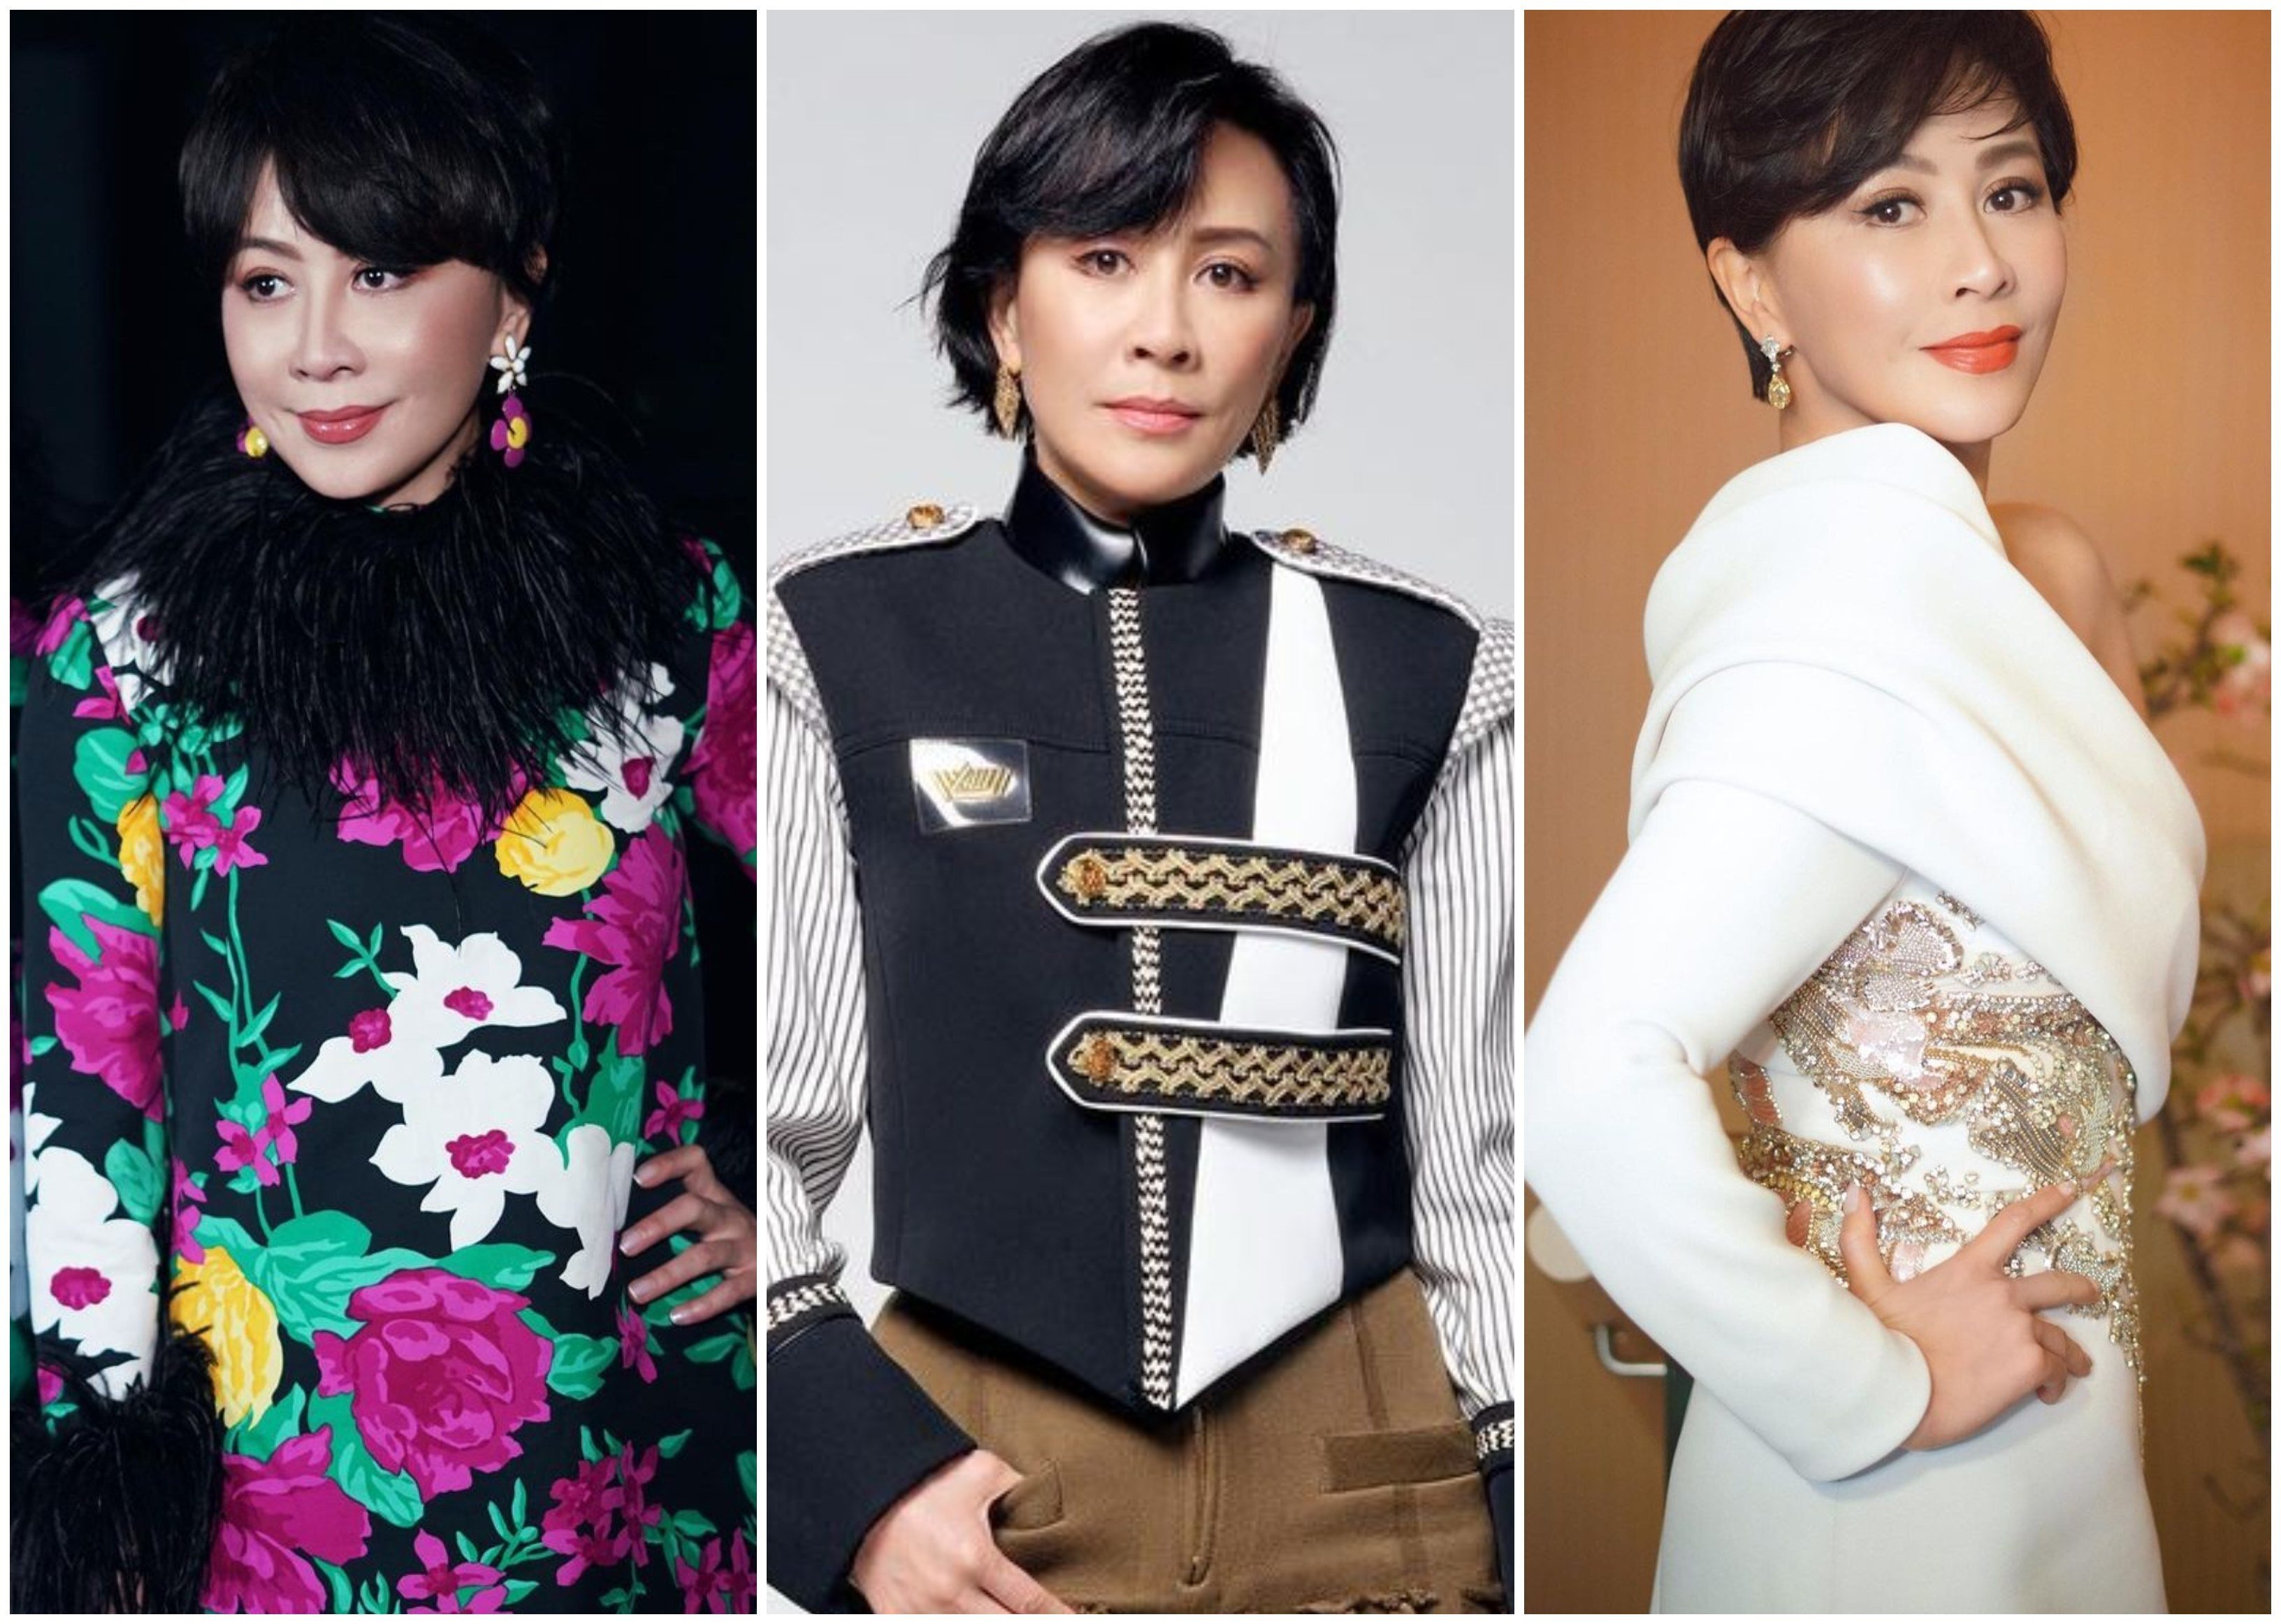 Carina Lau is among Hong Kong’s most stylish celebrities, often wearing designers like Yves Saint Laurent and Louis Vuitton. Photo: @carinalau1208/Instagram